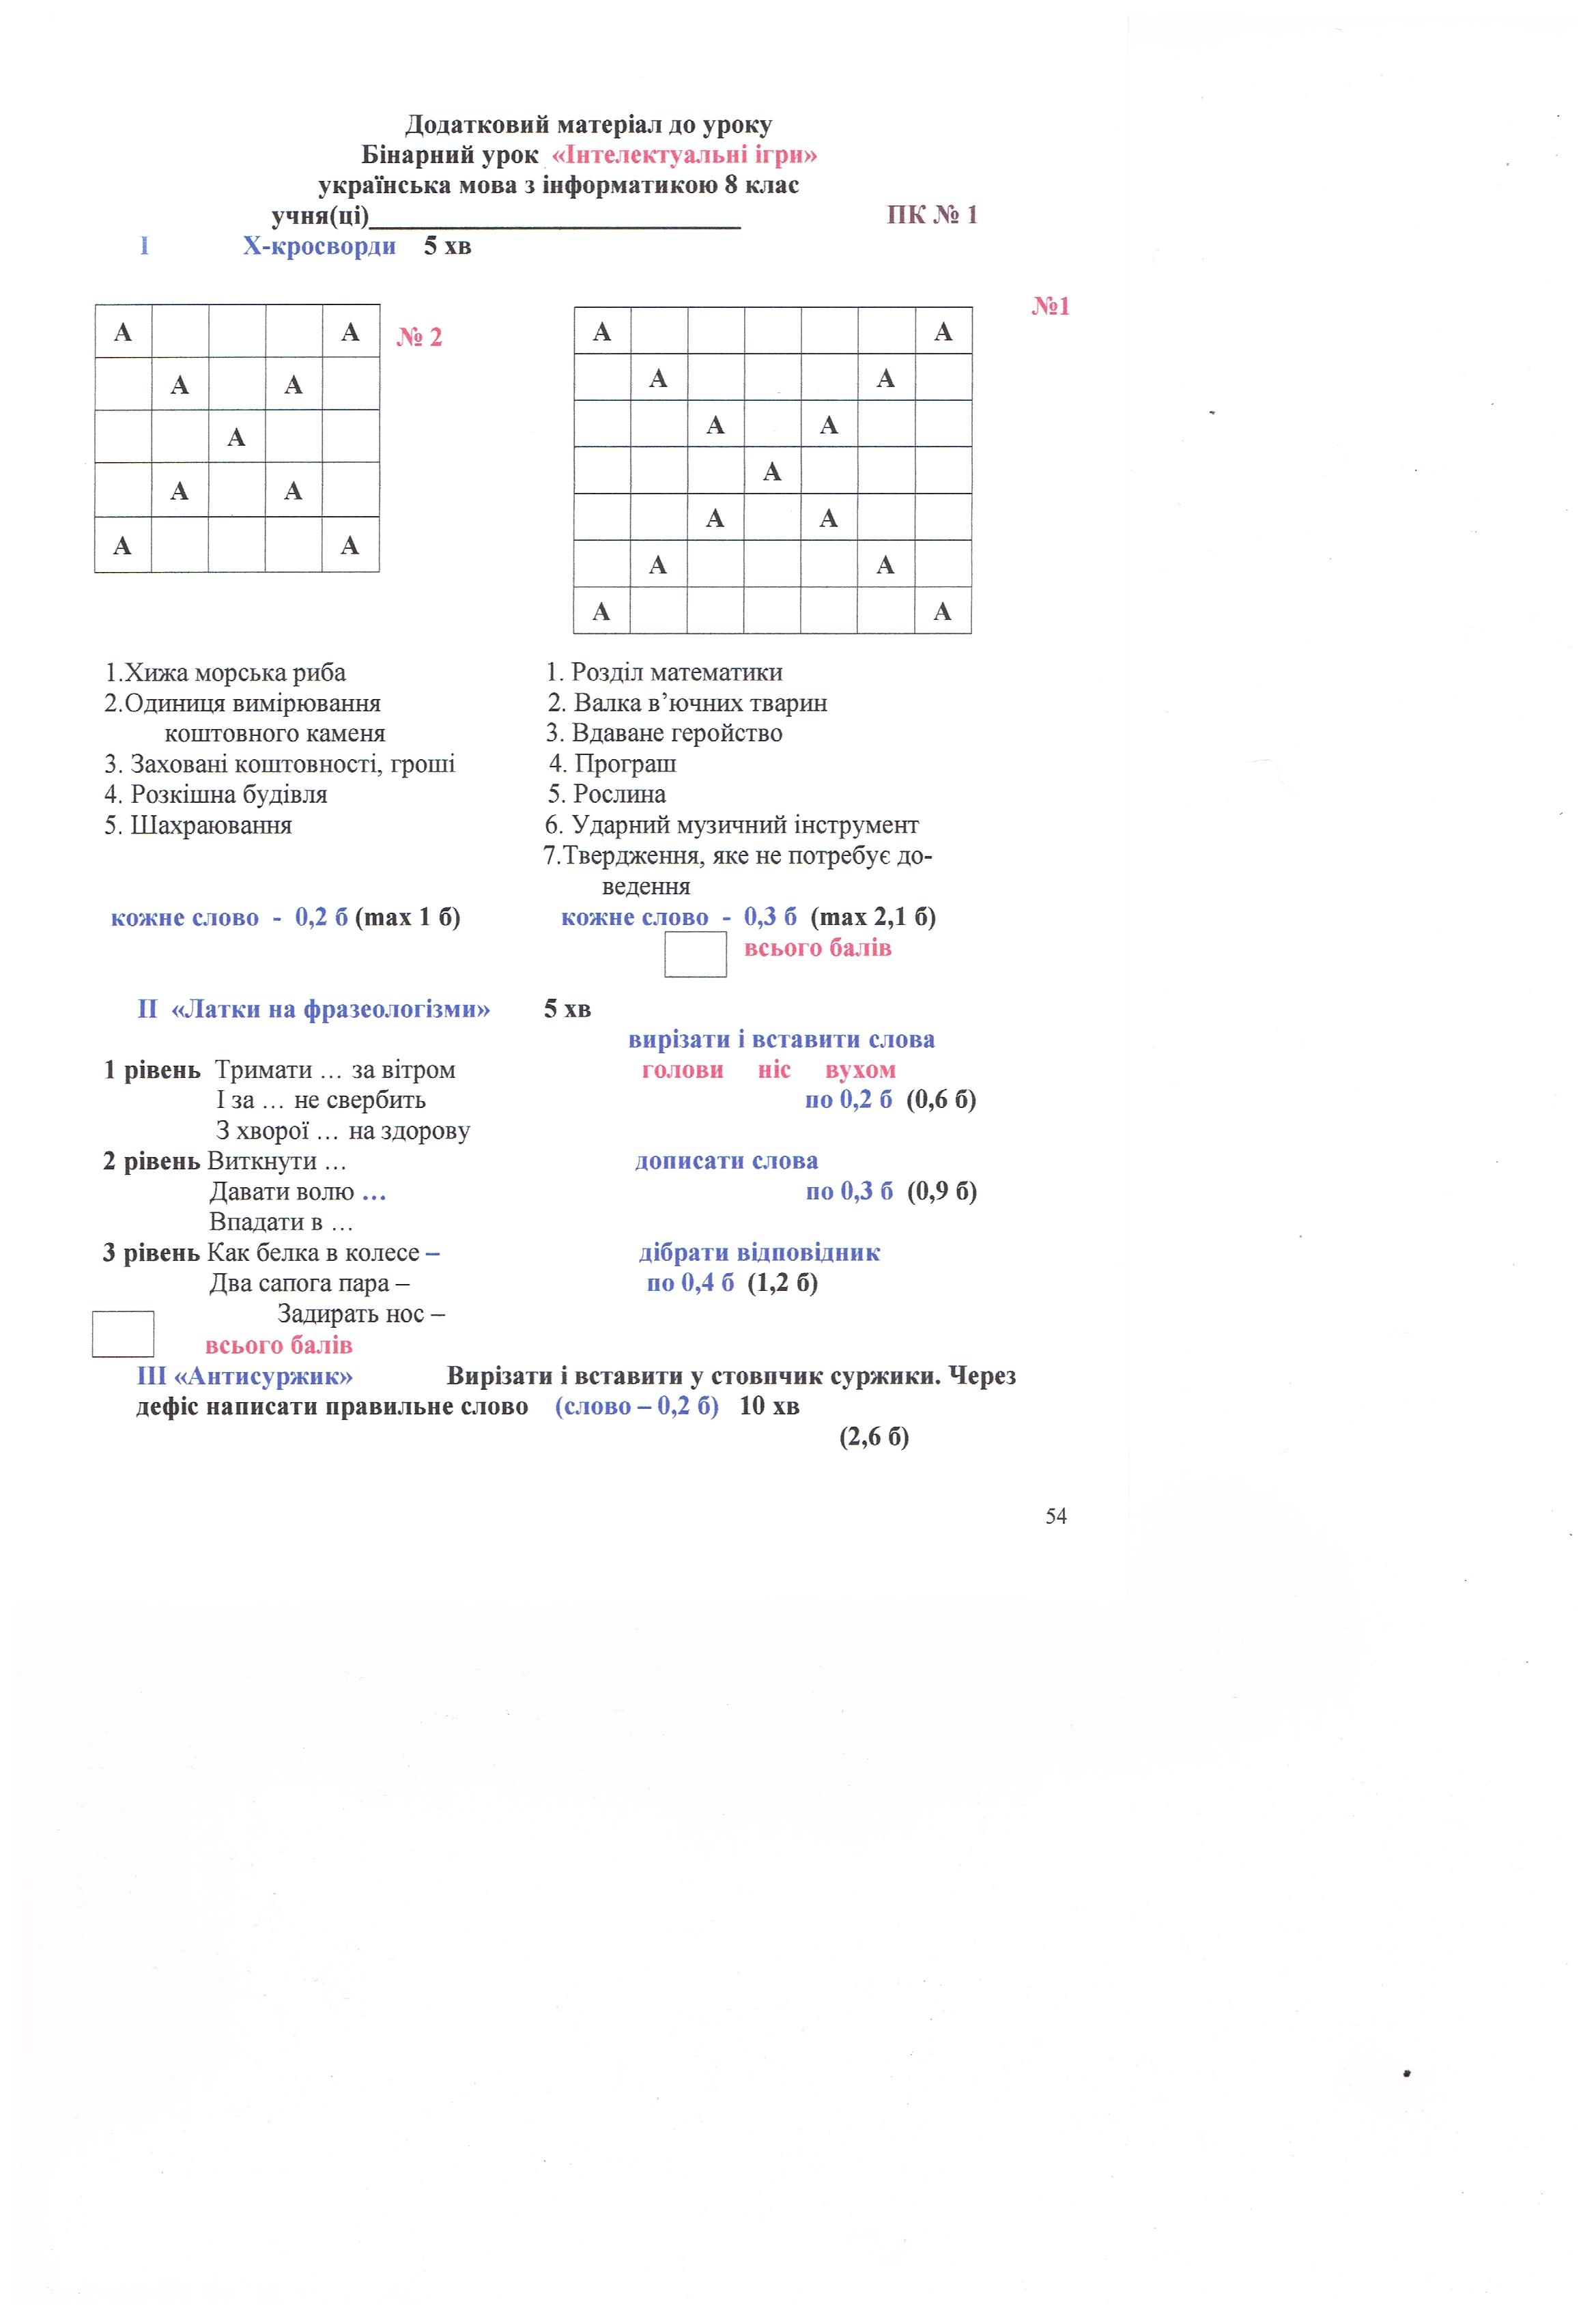 Дидактический материал к бинарному уроку Українська мова з інформатикою, 8 класс